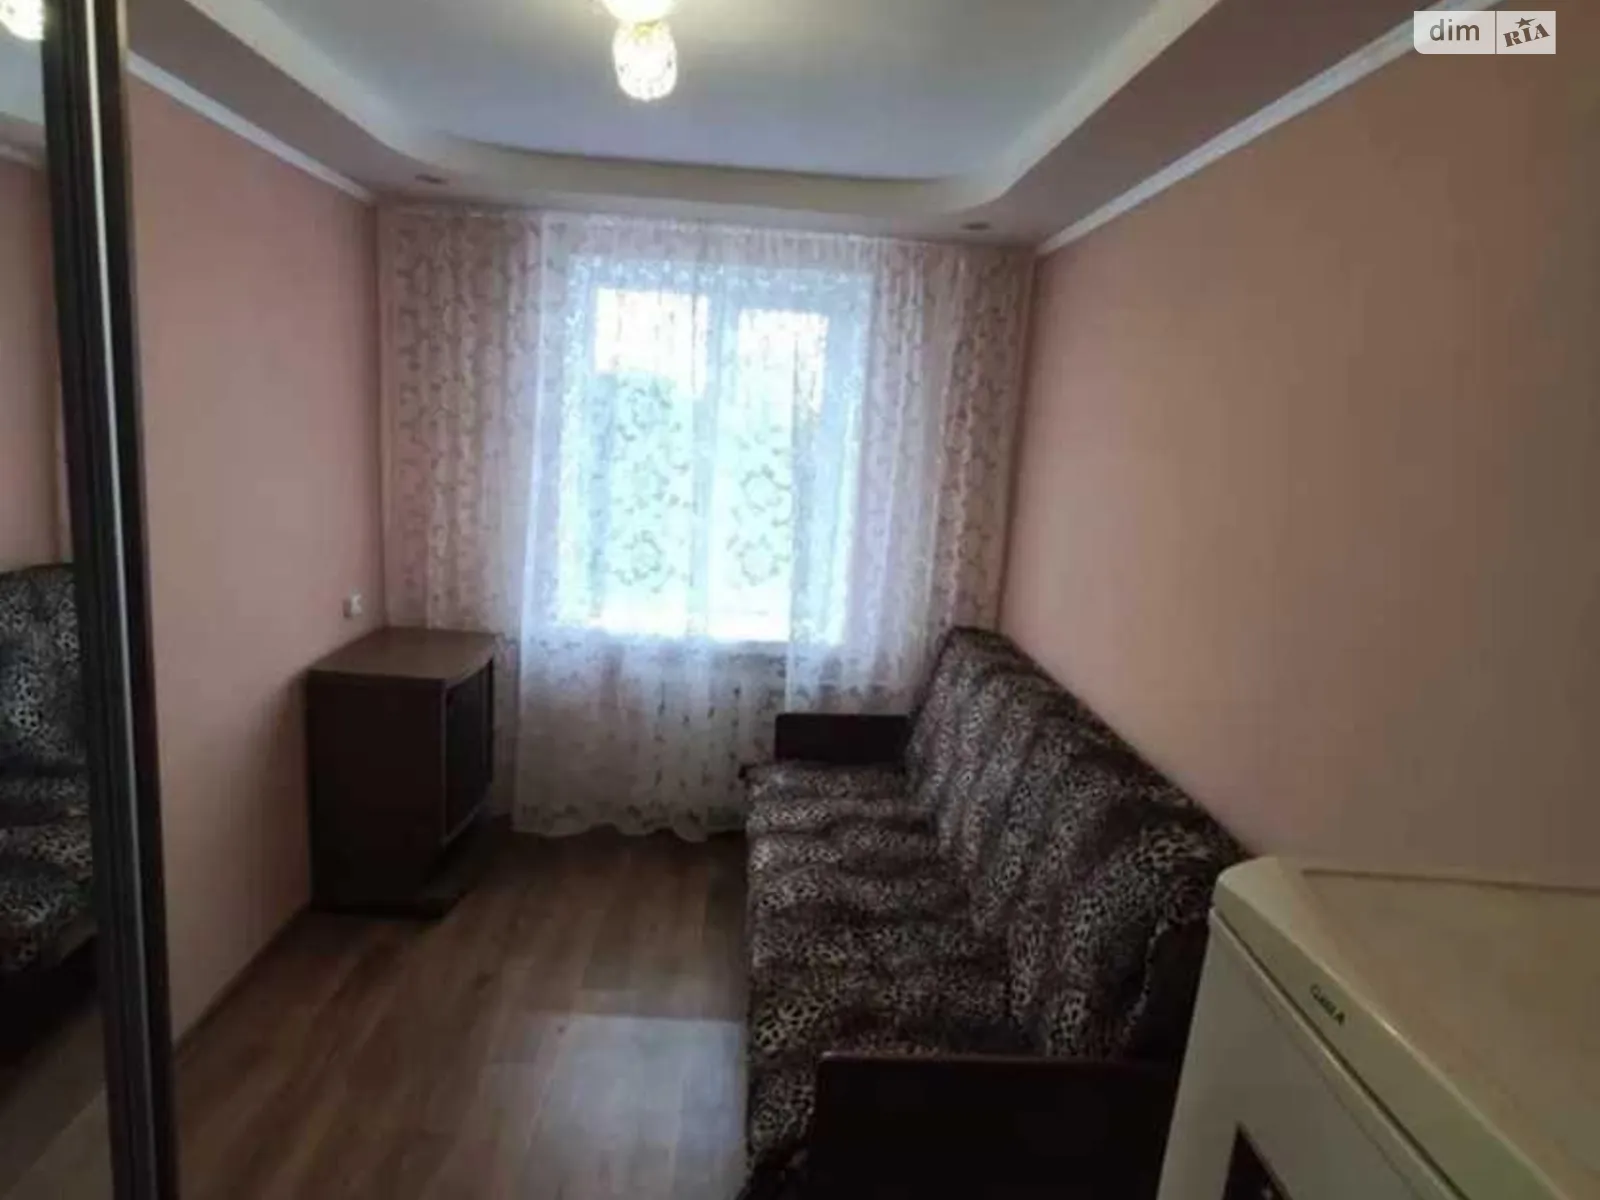 Продается комната 13 кв. м в Харькове - фото 2